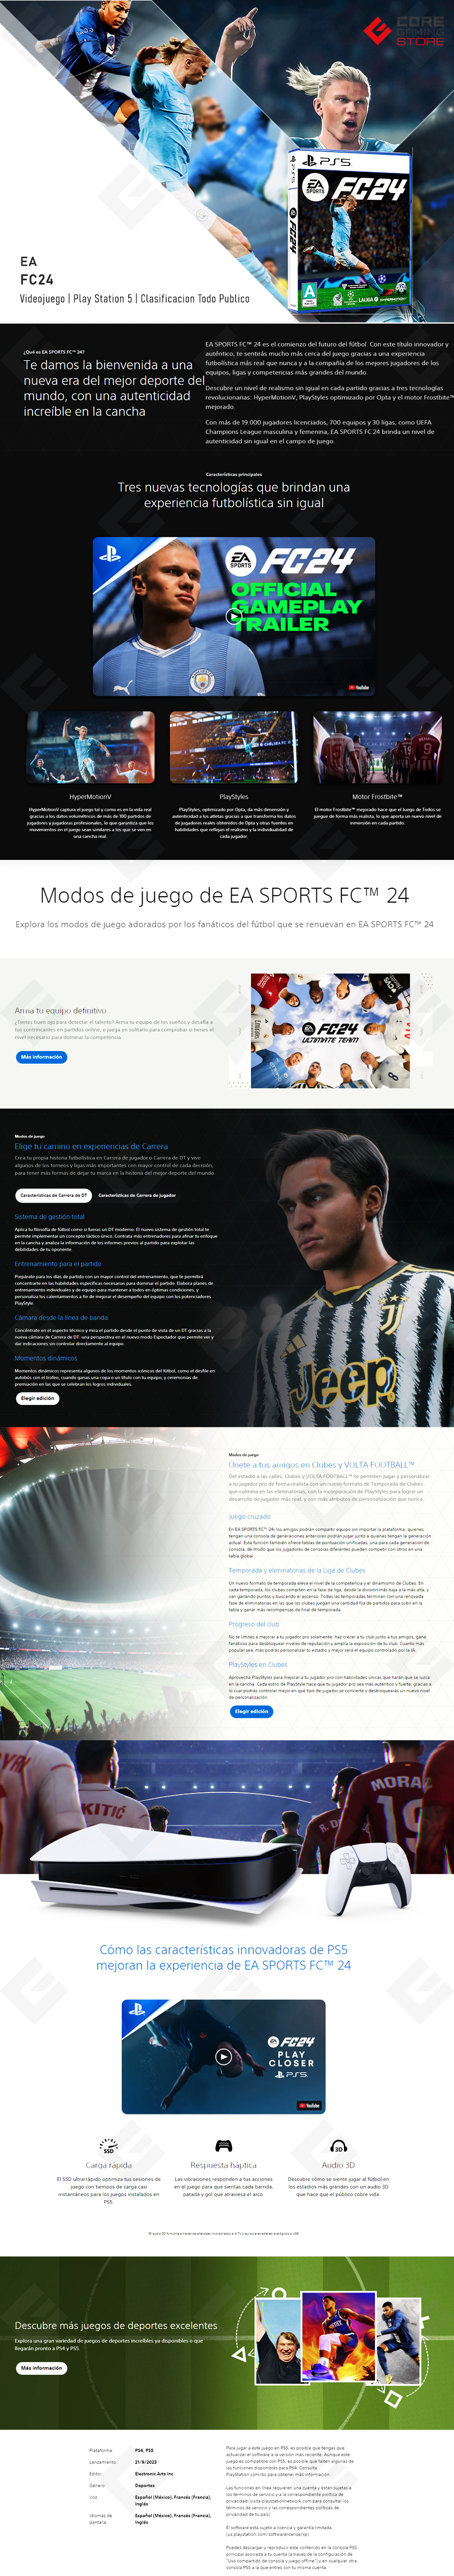 Videojuego EA Sports FC 24 Standard Edition para PlayStation 5 - P00000004141